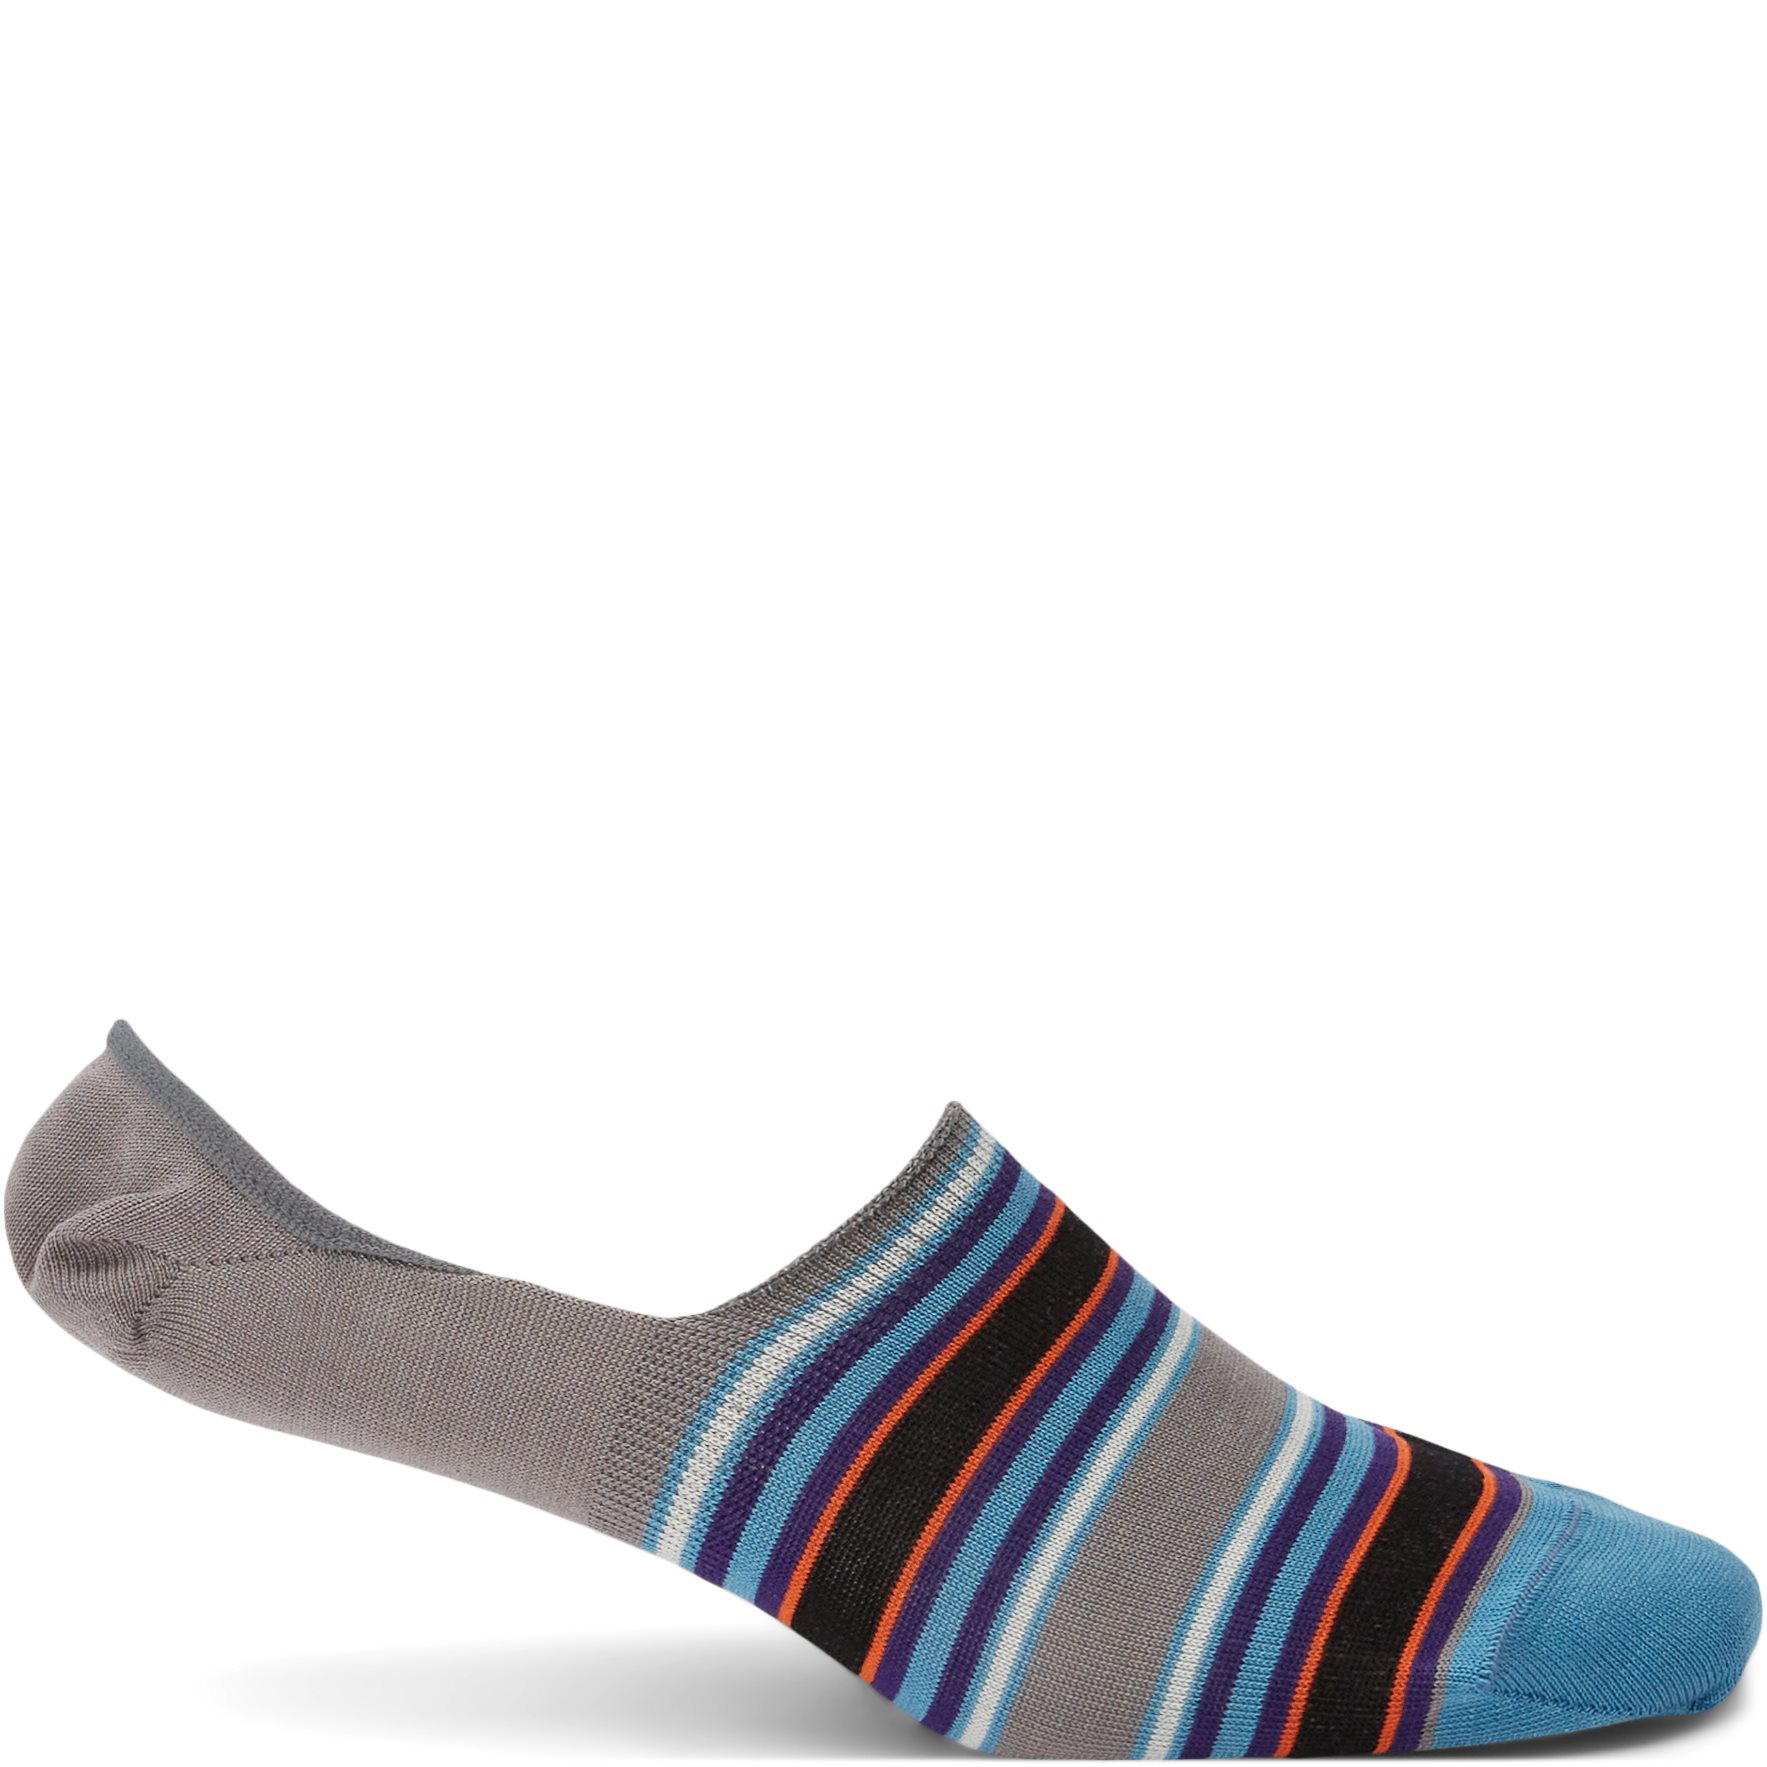 Socks - Grey